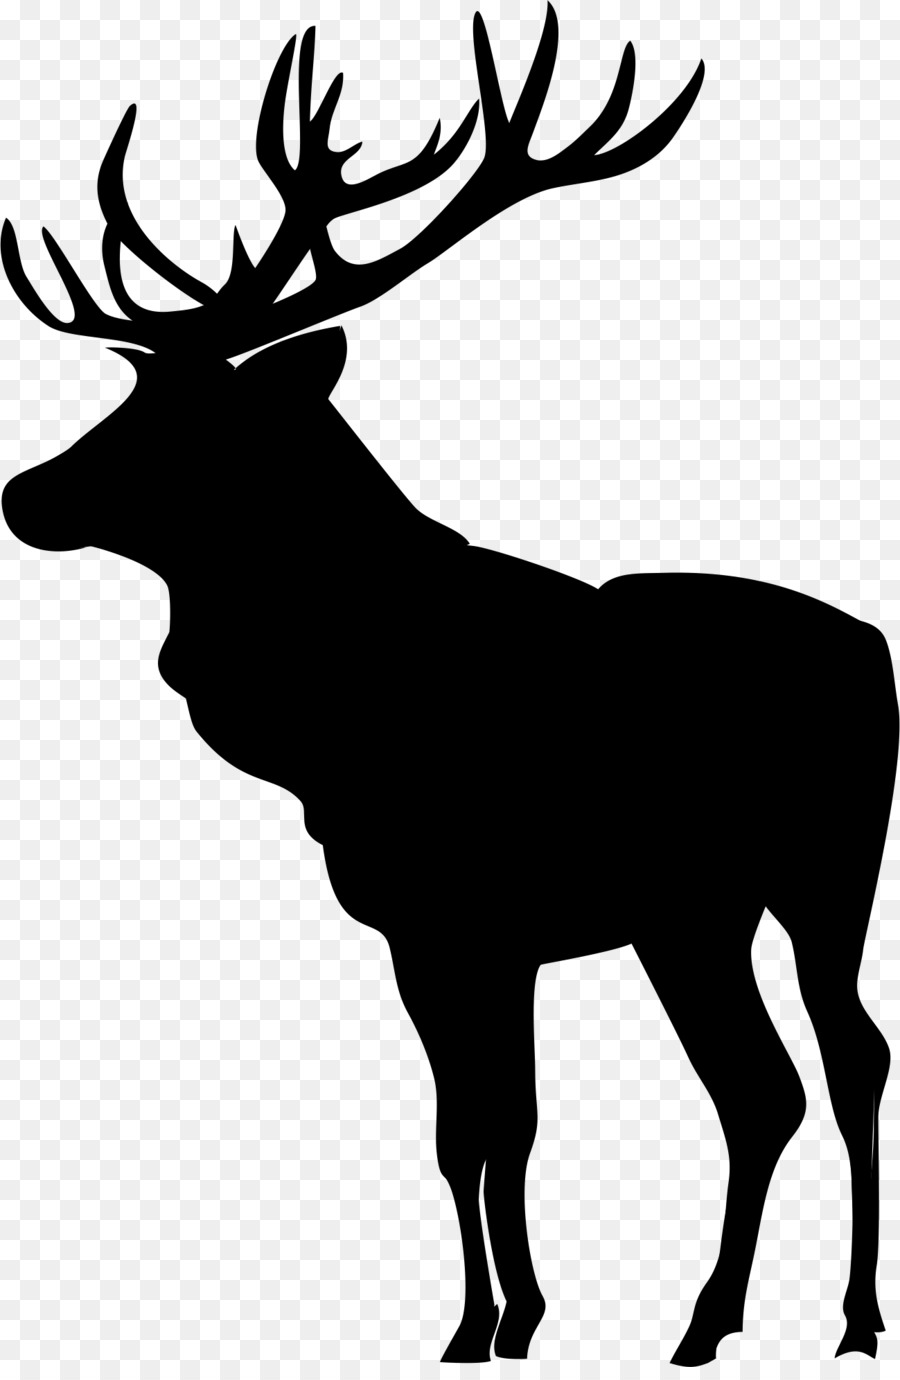 elk clipart white background